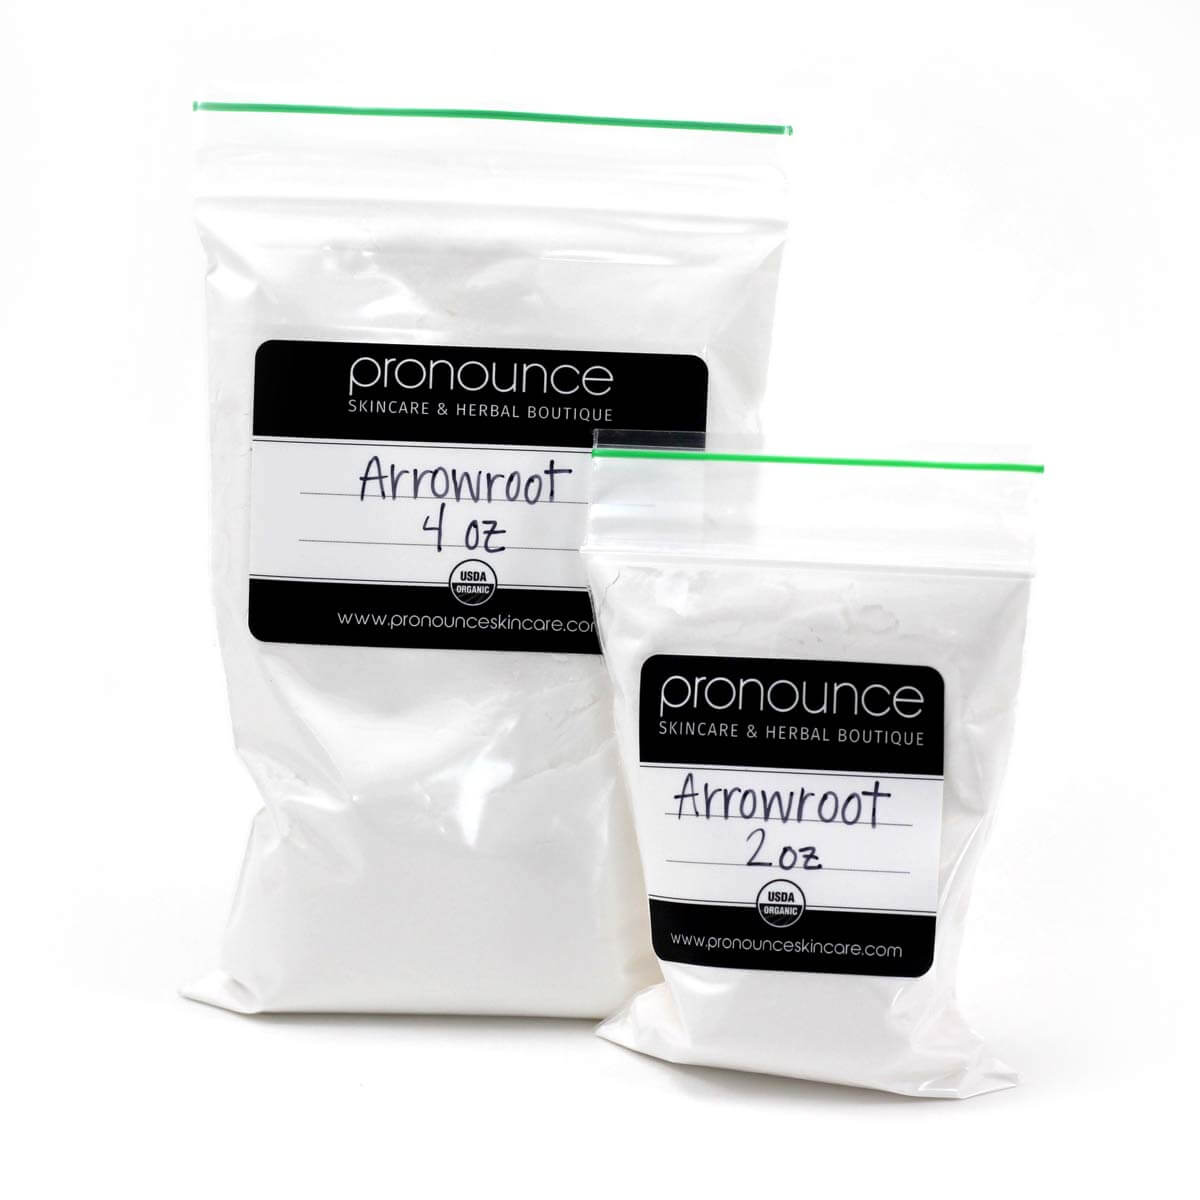 Arrowroot-Pronounce-Skincare-Herbal-Boutique